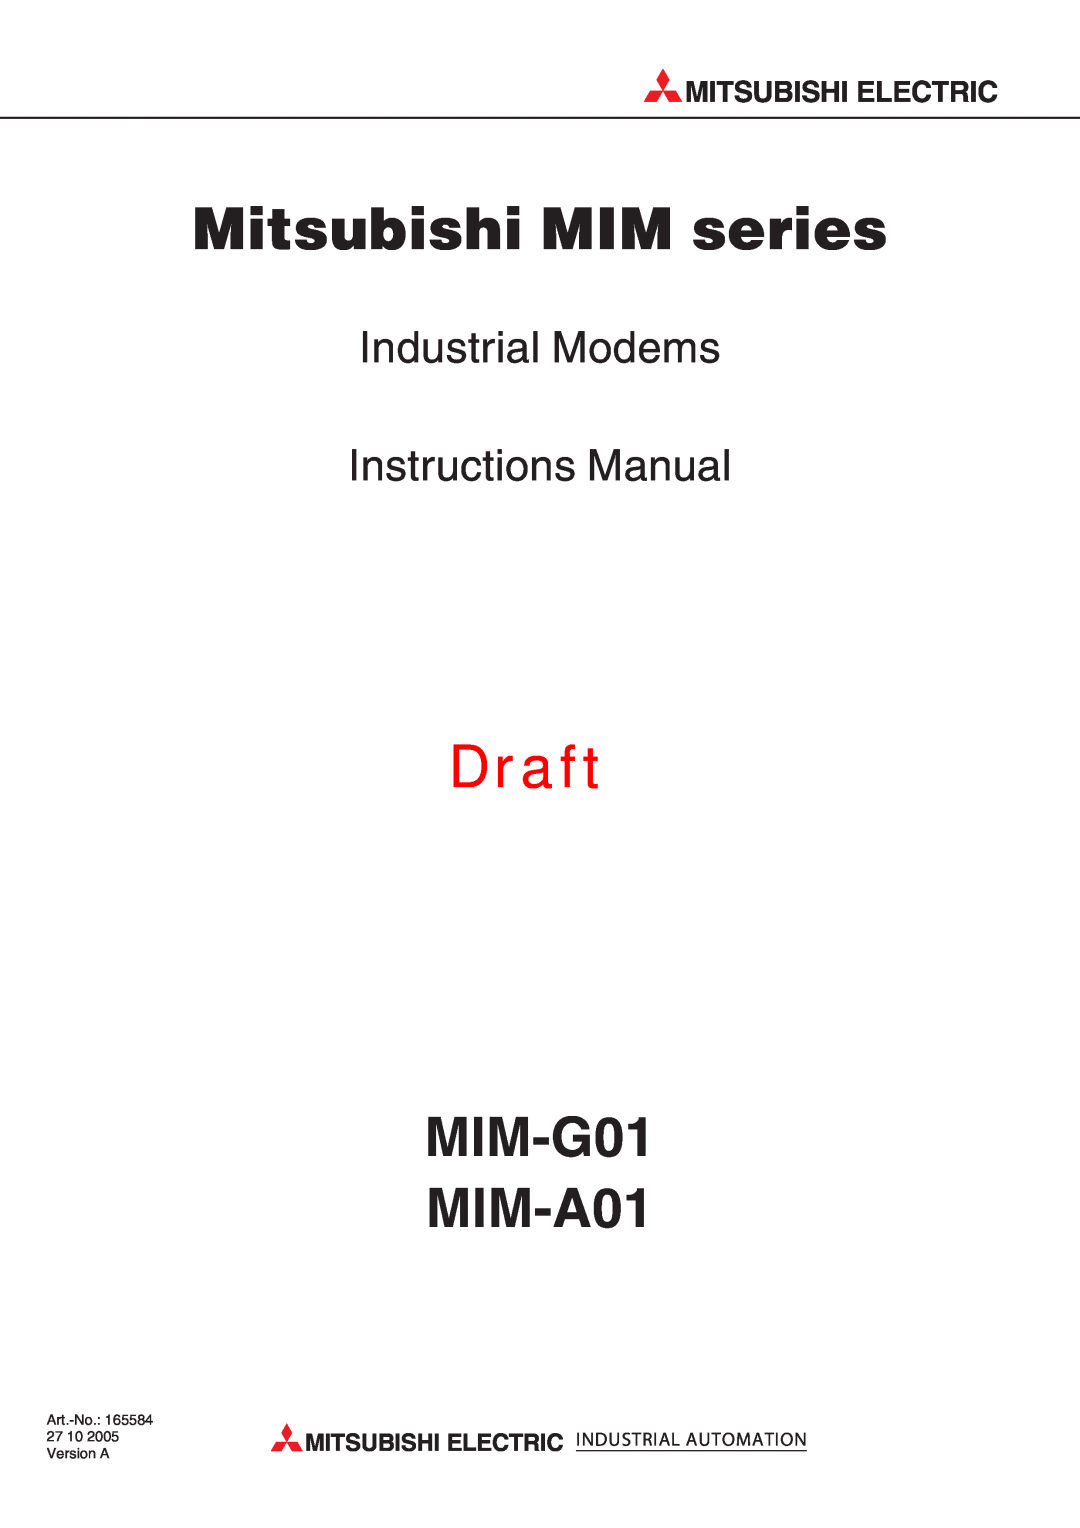 Mitsubishi Electronics MIM-G01, MIM-A01 manual Mitsubishi Electric Industrial Automation, Mitsubishi MIM series, Draft 